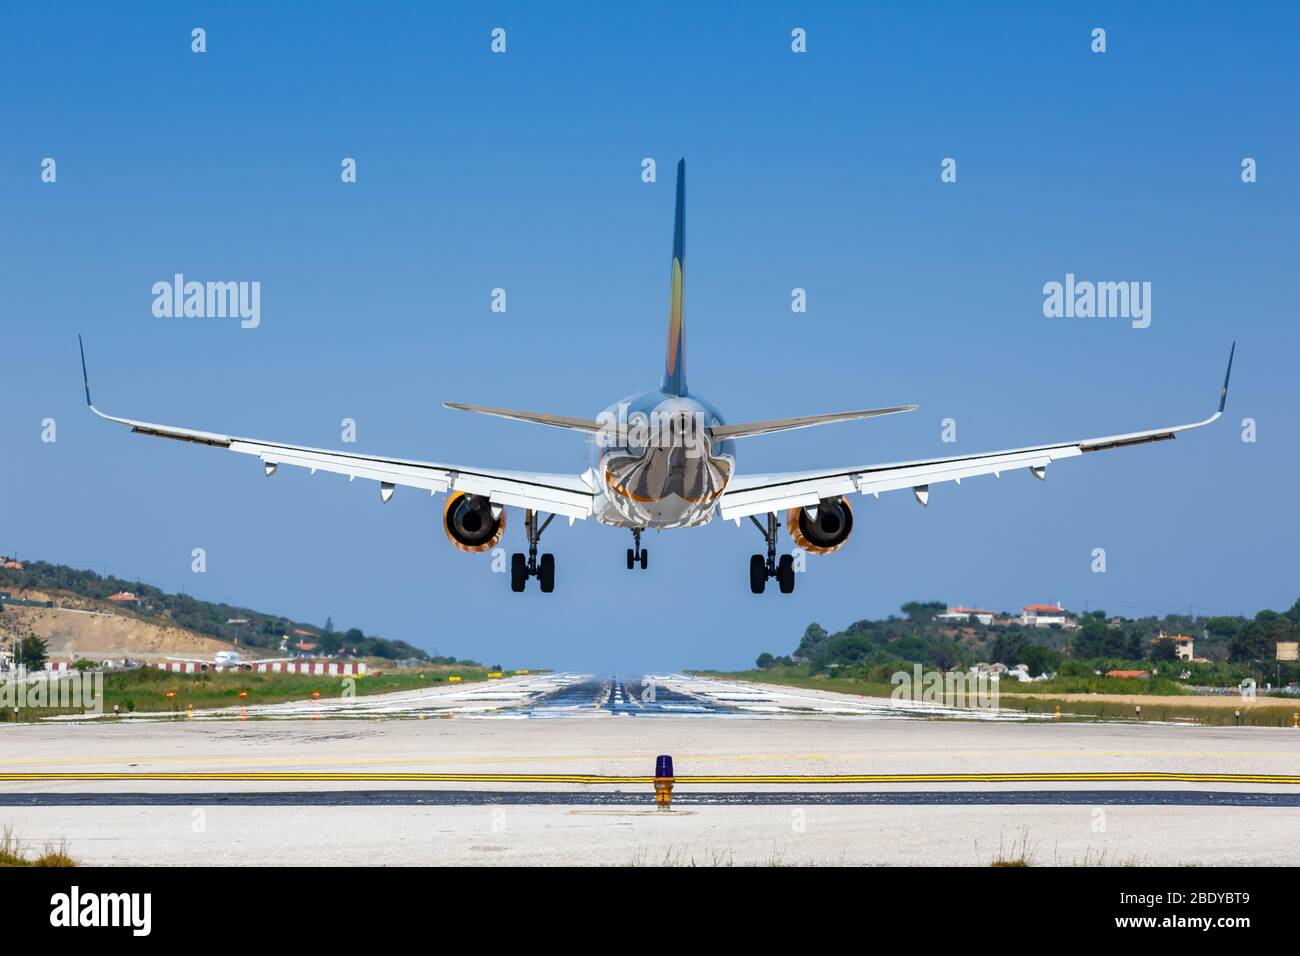 Skiathos, Griechenland – 31. Juli 2019: Thomas Cook Airlines Airbus-Flugzeug am Skiathos-Flughafen (JSI) in Griechenland. Airbus ist ein europäischer Flugzeughersteller Stockfoto